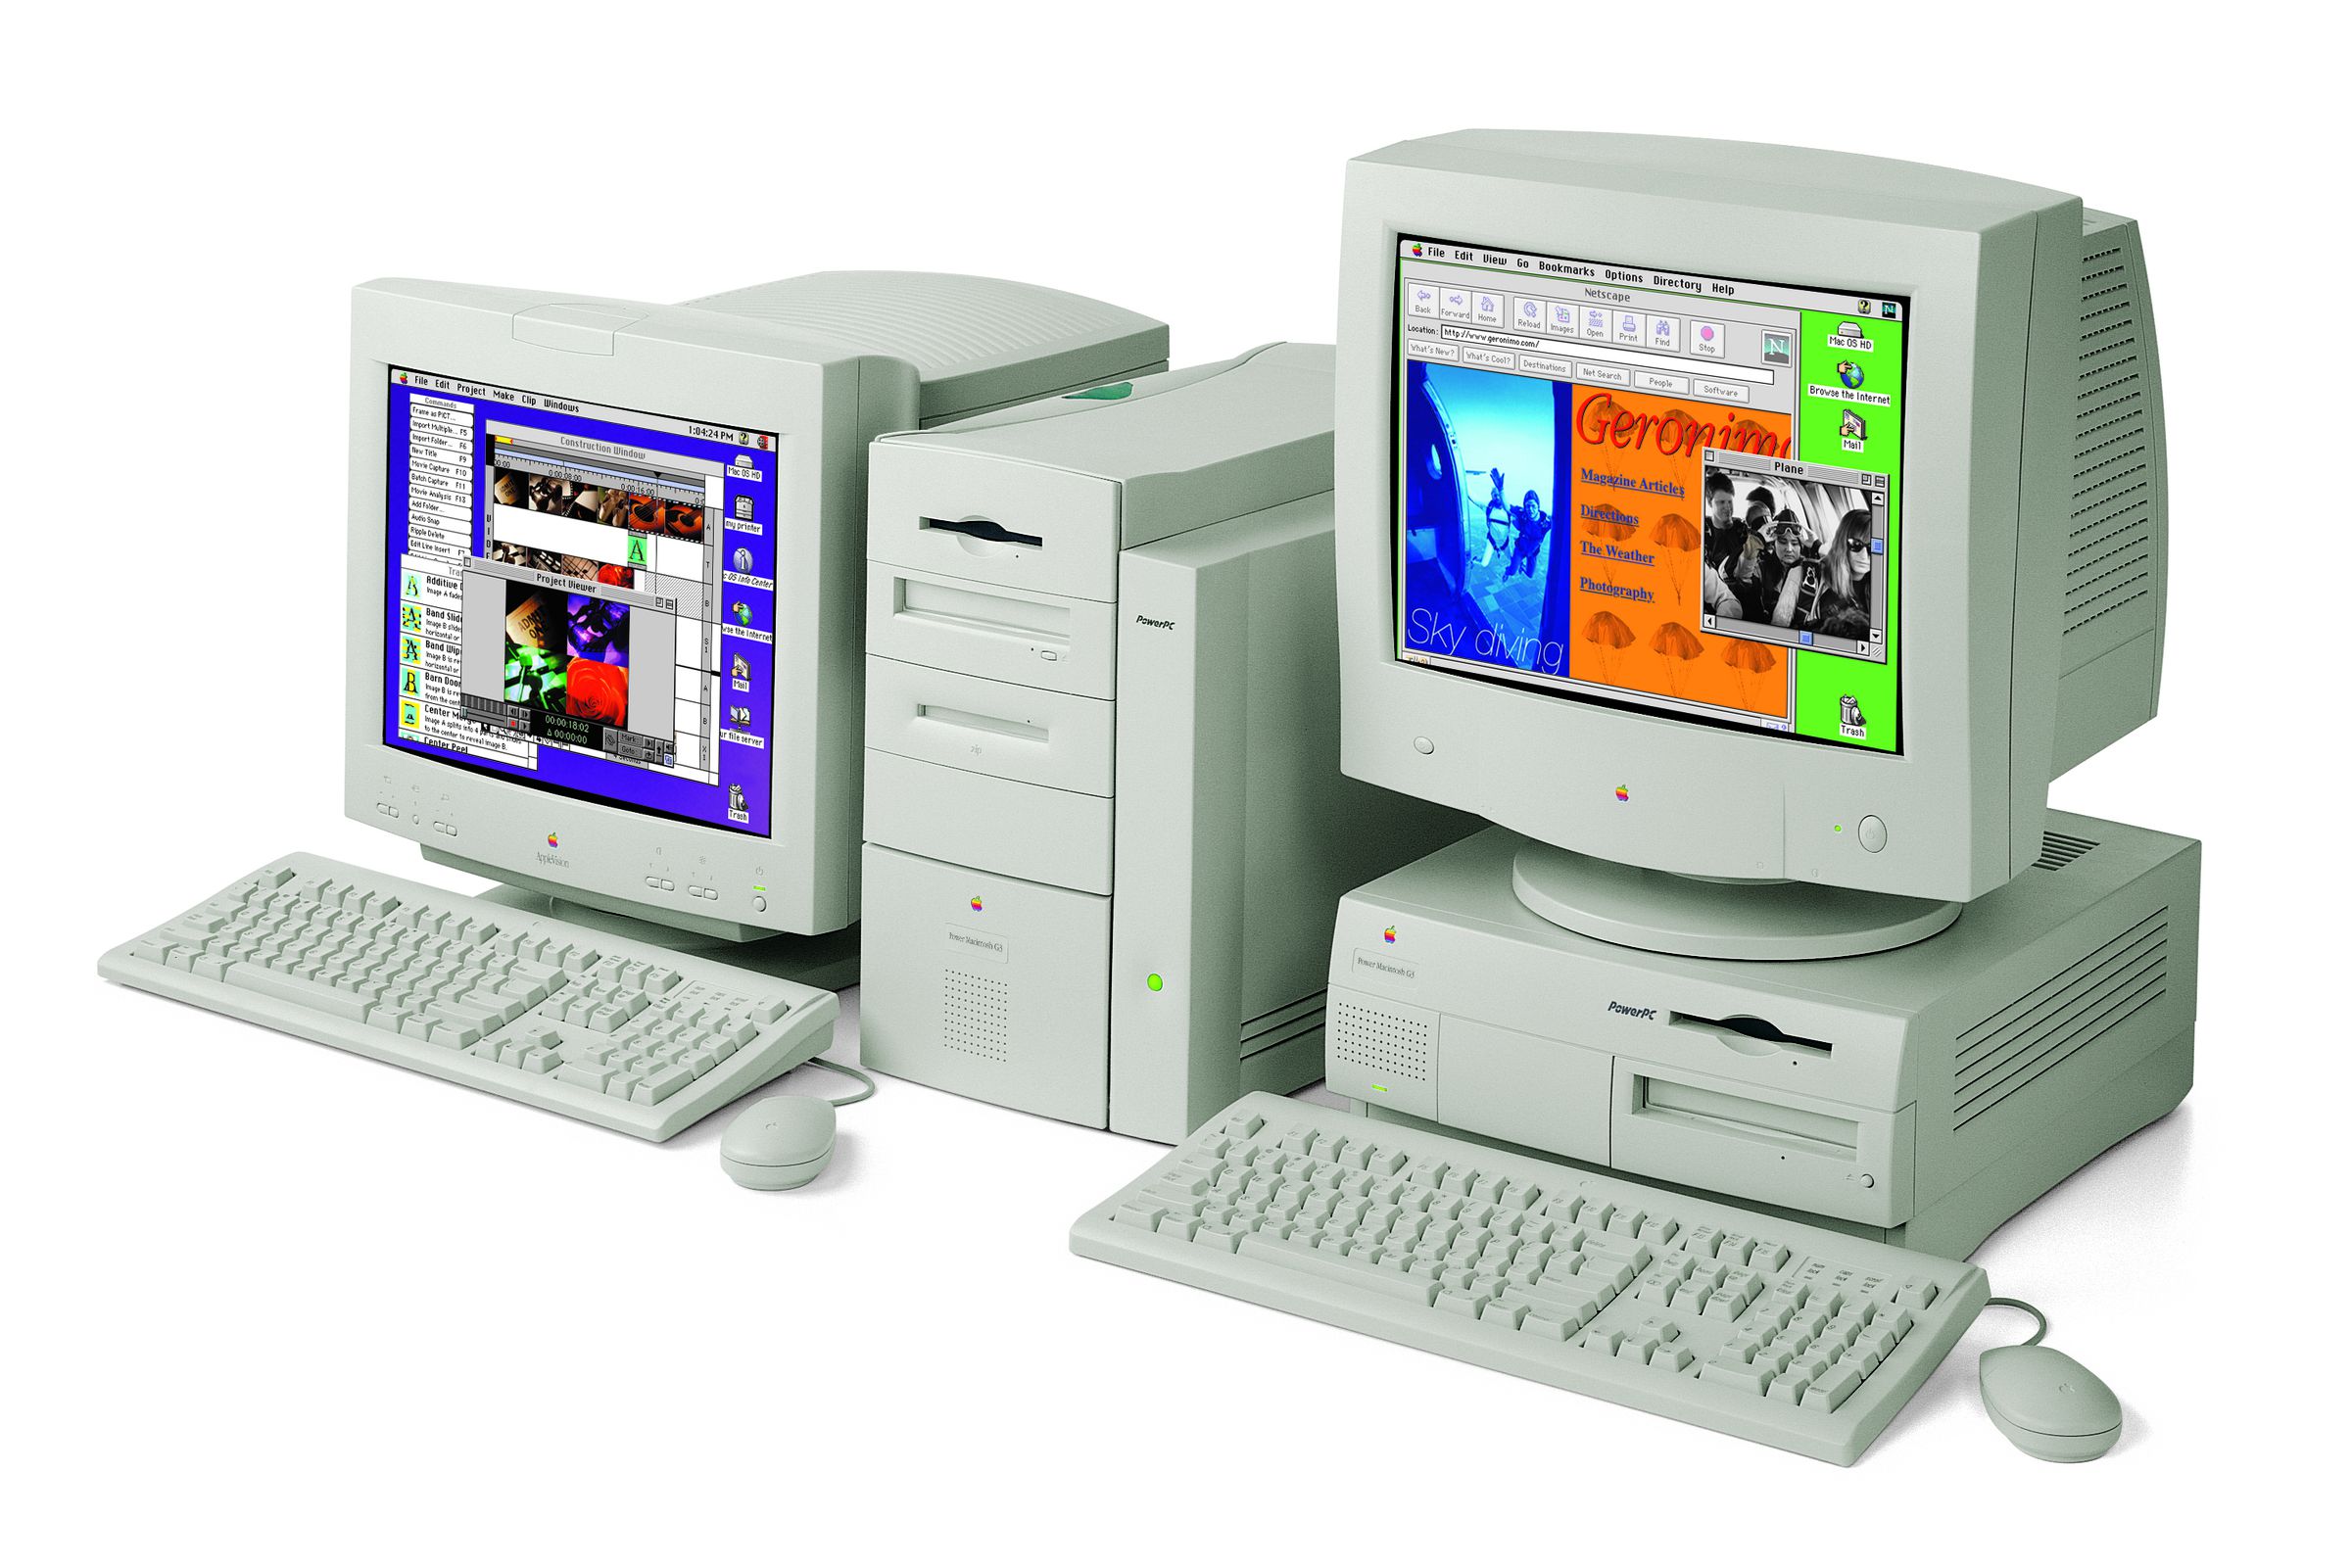 Power Macintosh G3 beige desktops, one a tower, one a pedestal computer, with big CRT monitors.